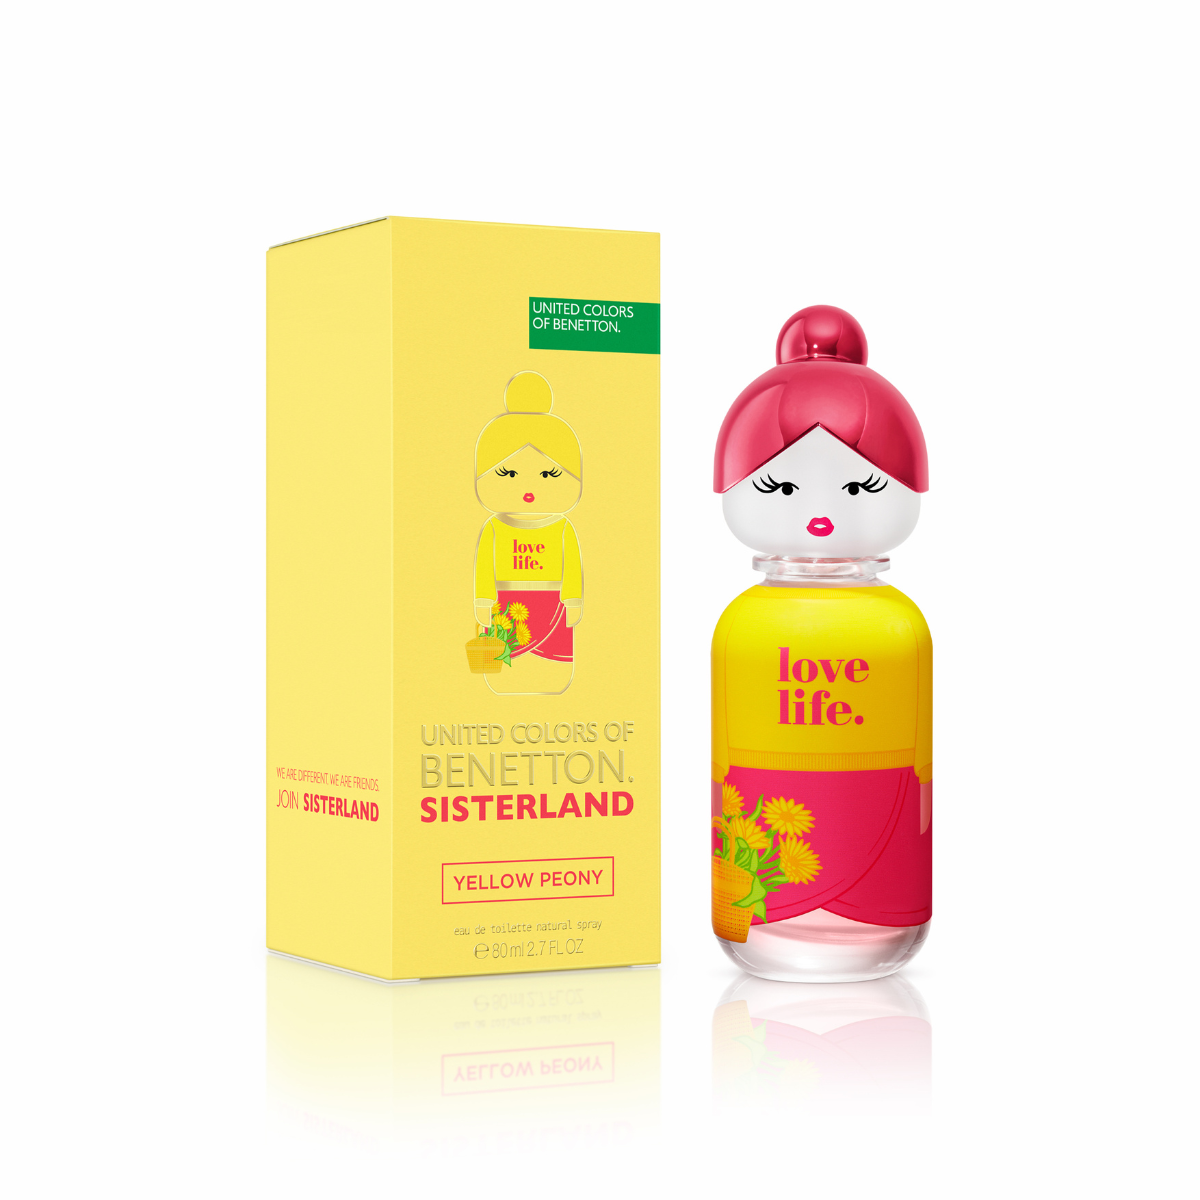 Benetton Sisterland Yellow Peony Eau de Toilette